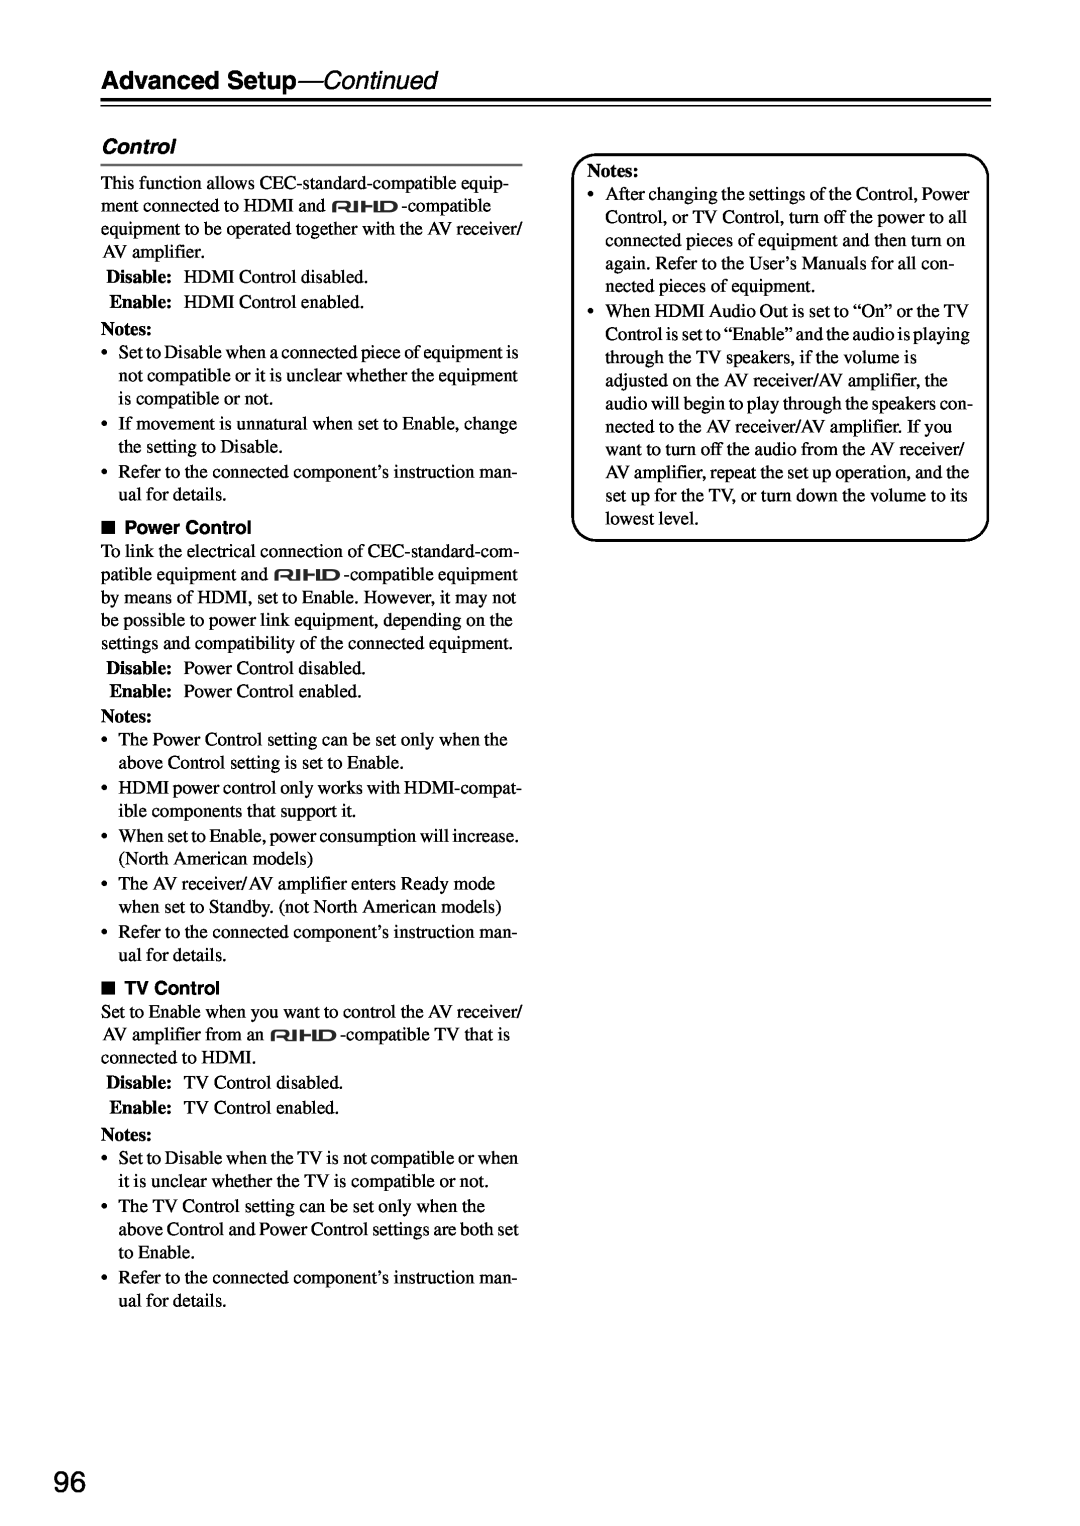 Onkyo TX-SA705 instruction manual Advanced Setup—Continued, Control, Notes 